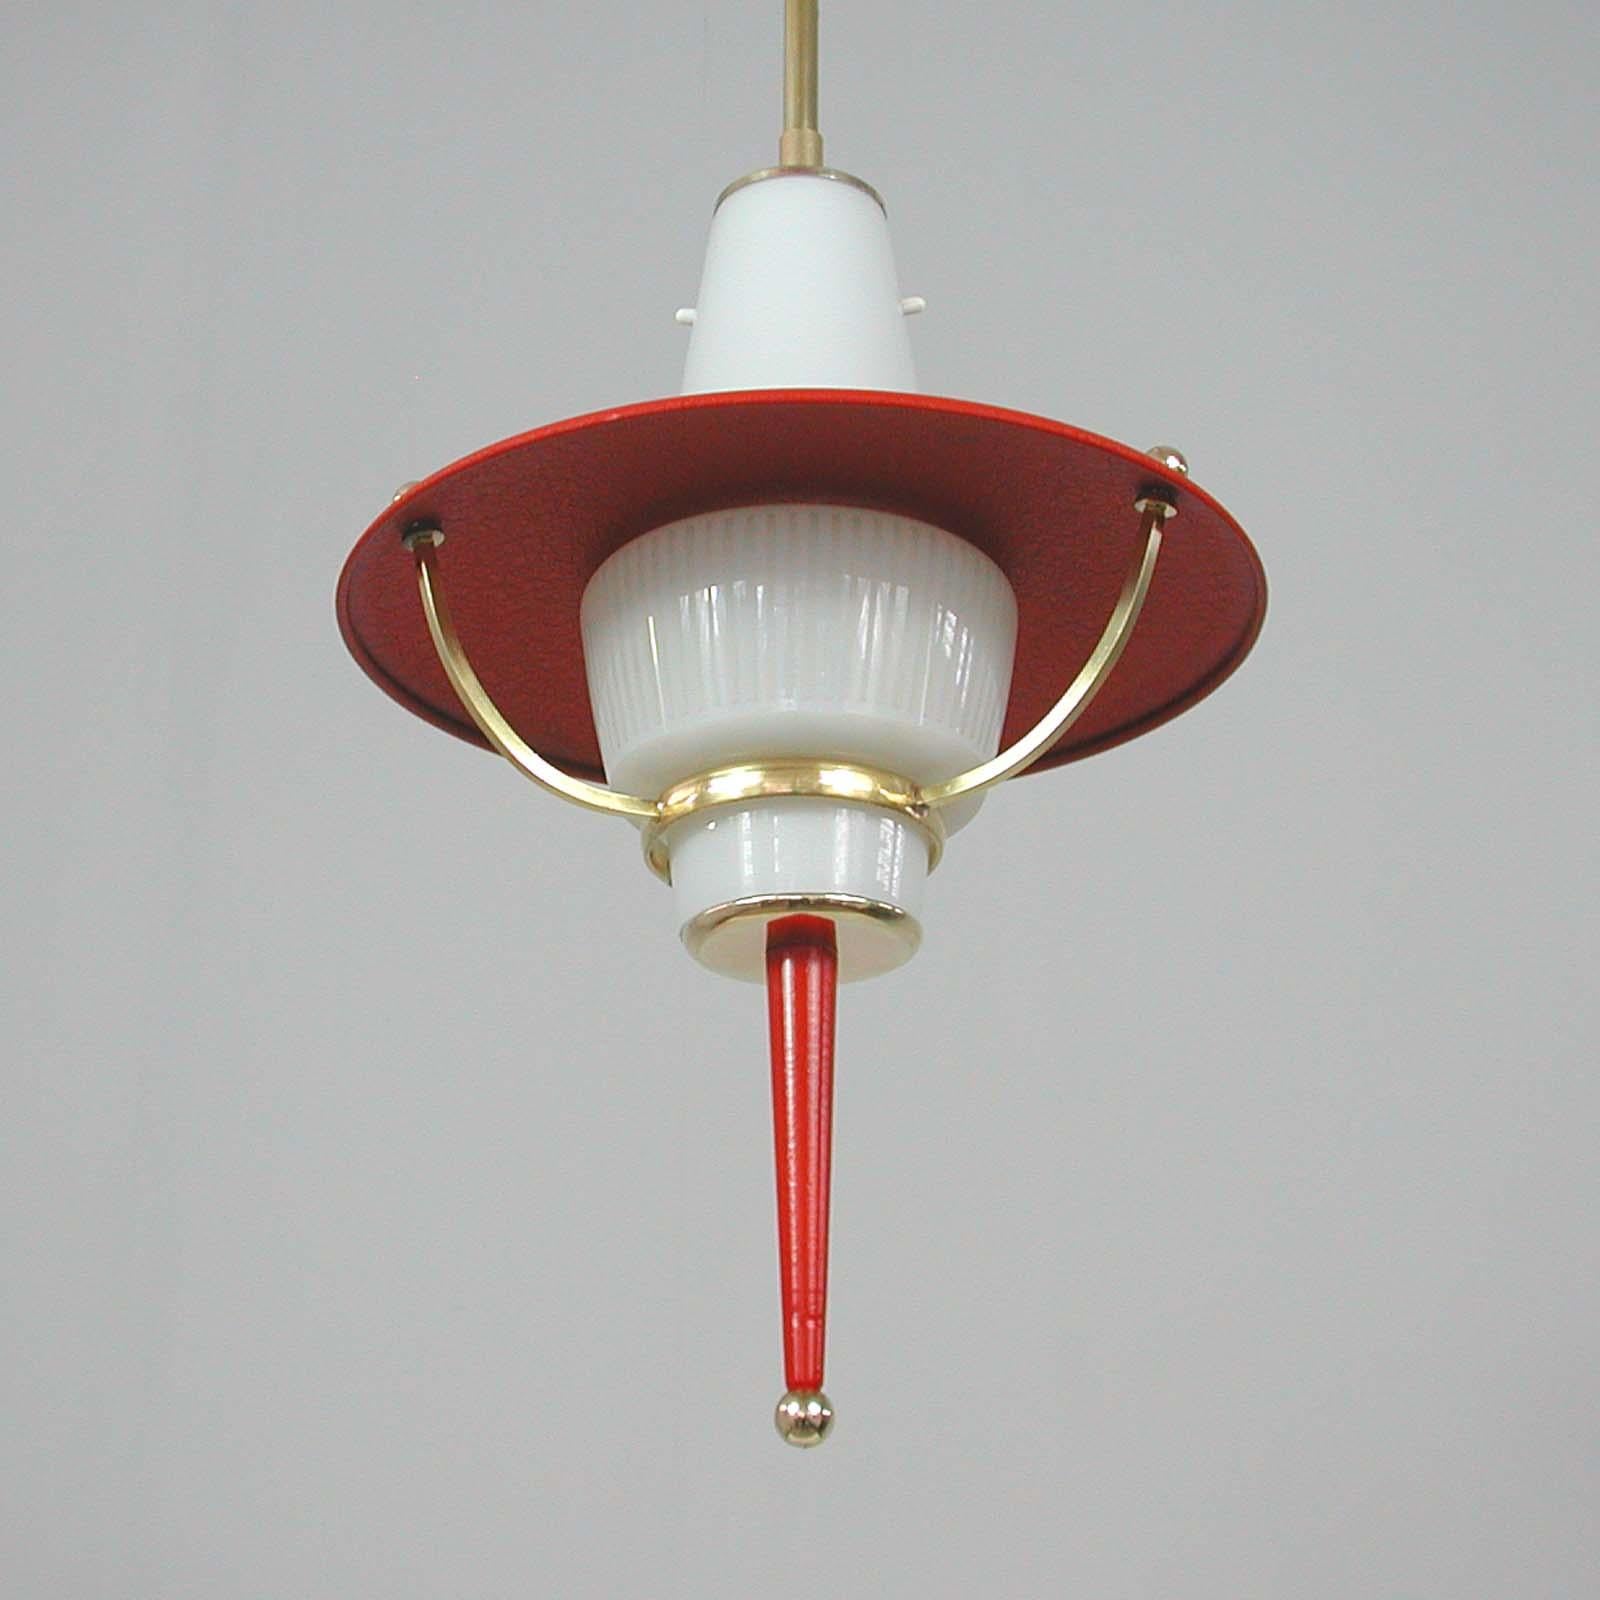 Modernist 1950s Italian Red Lantern, Milk Glass & Brass For Sale 6